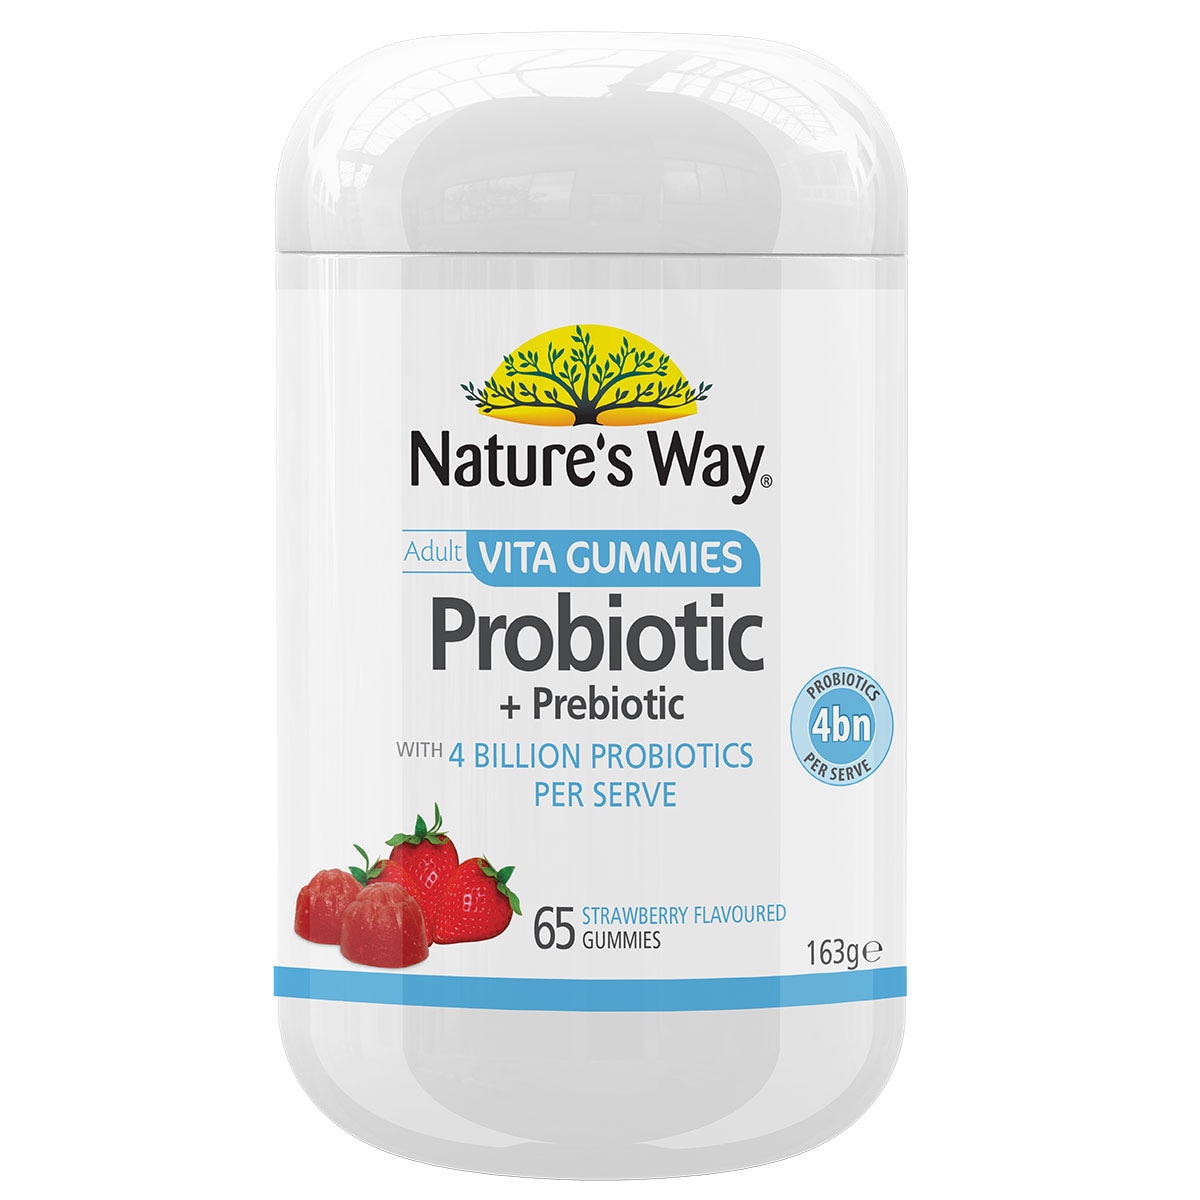 Natures Way Adult Vita Gummies Probiotic + Prebiotic Sugar Free 65 Pack (Improved Formula) Australia